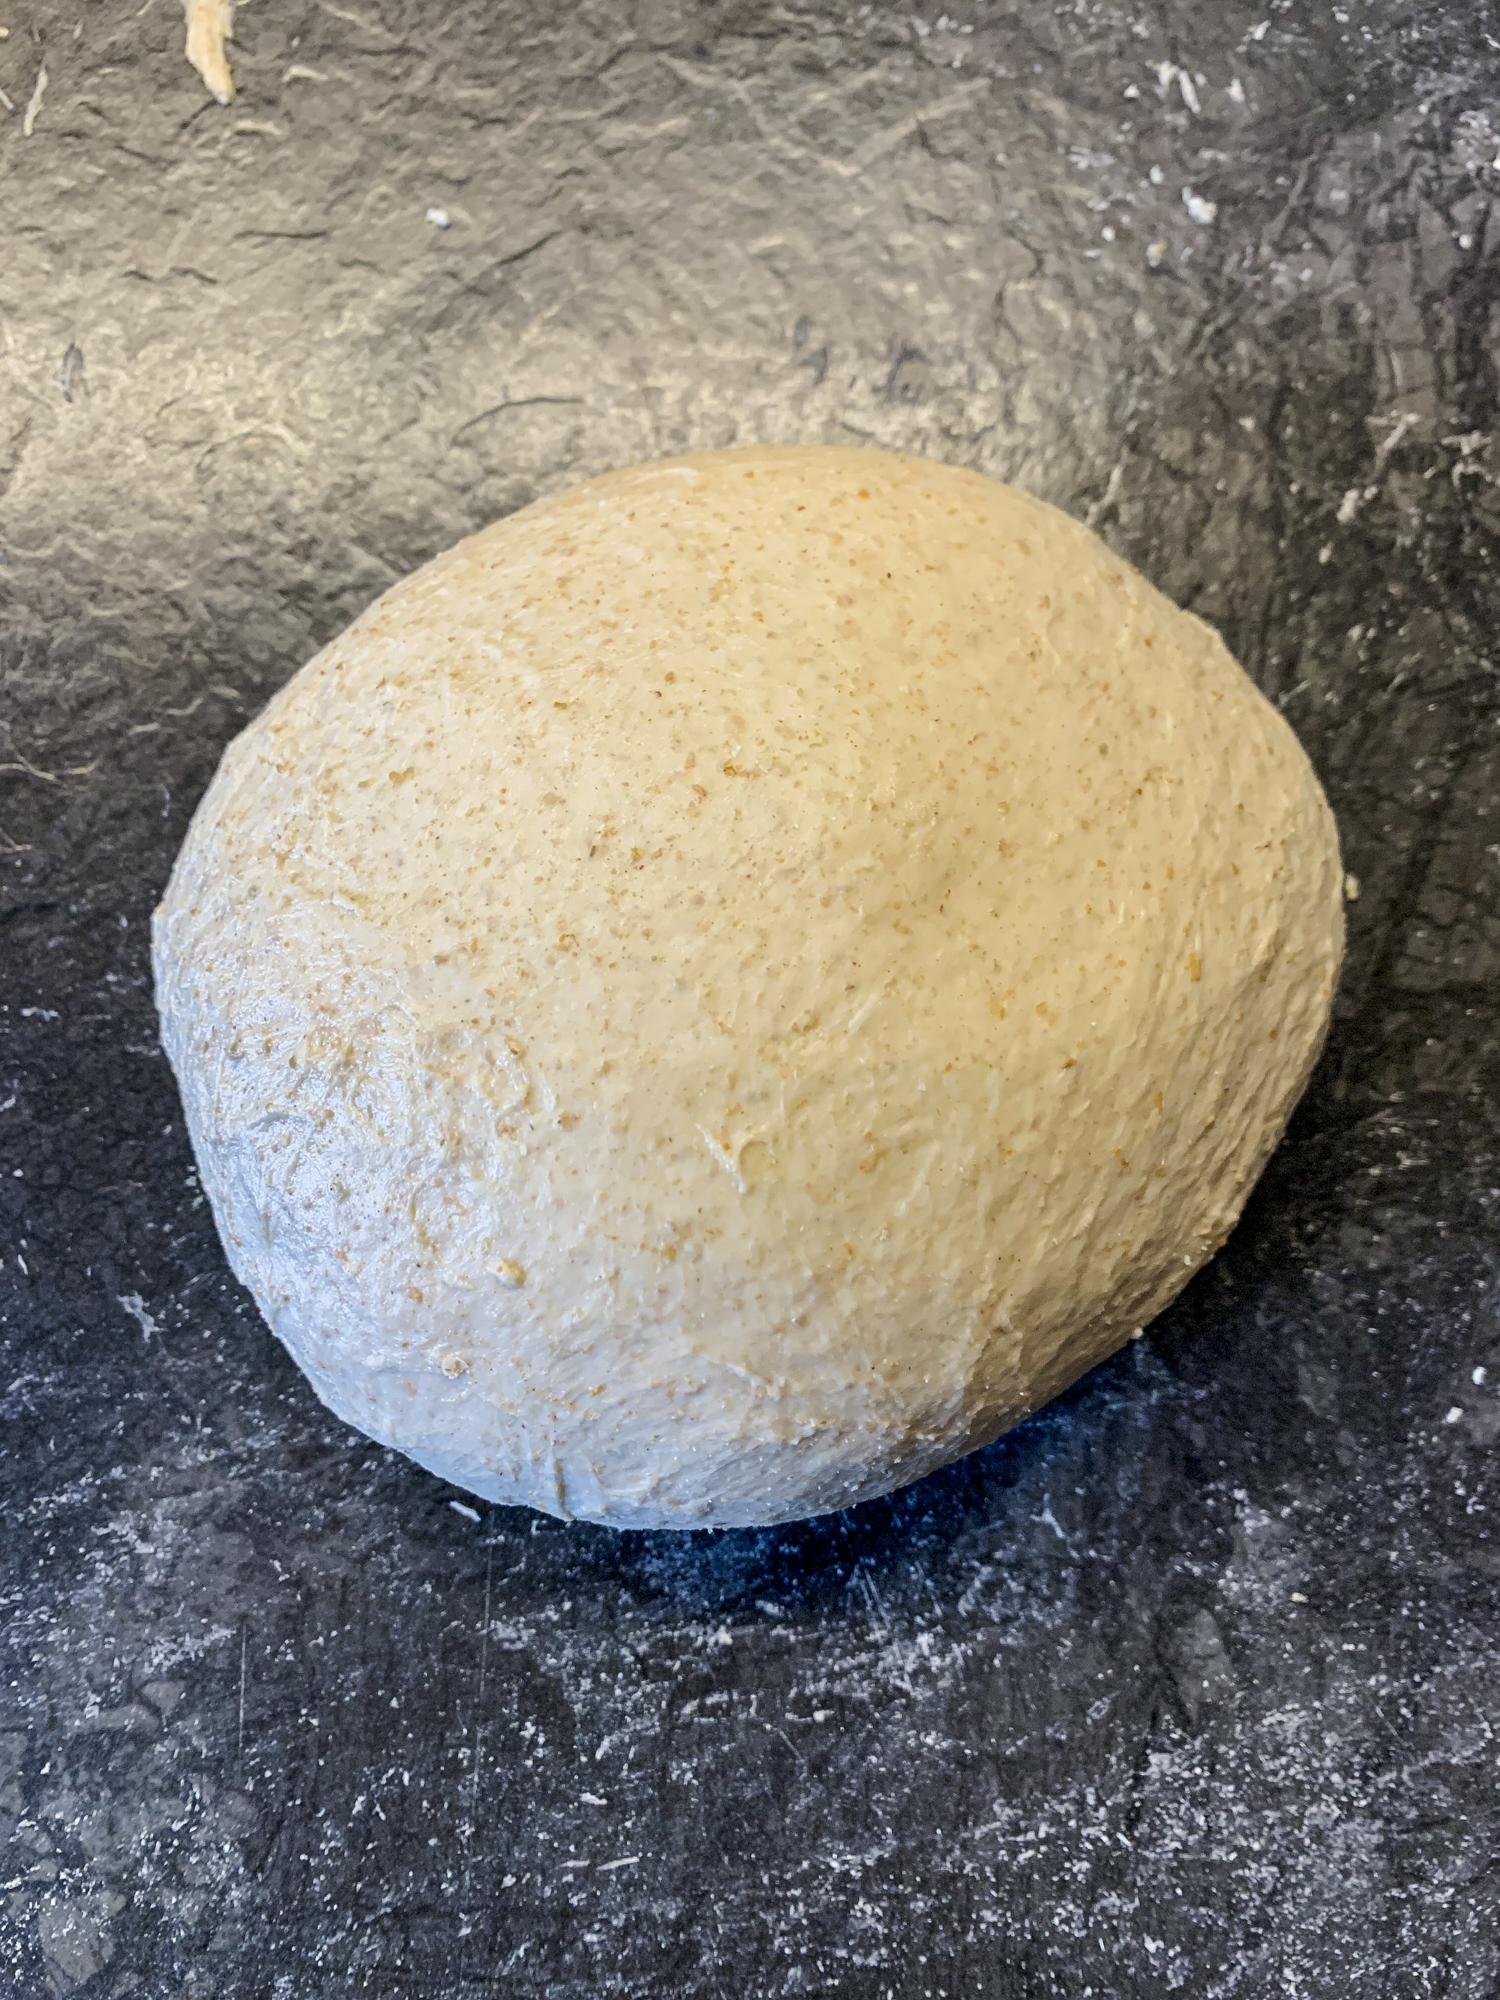 Basic Sourdough Bread